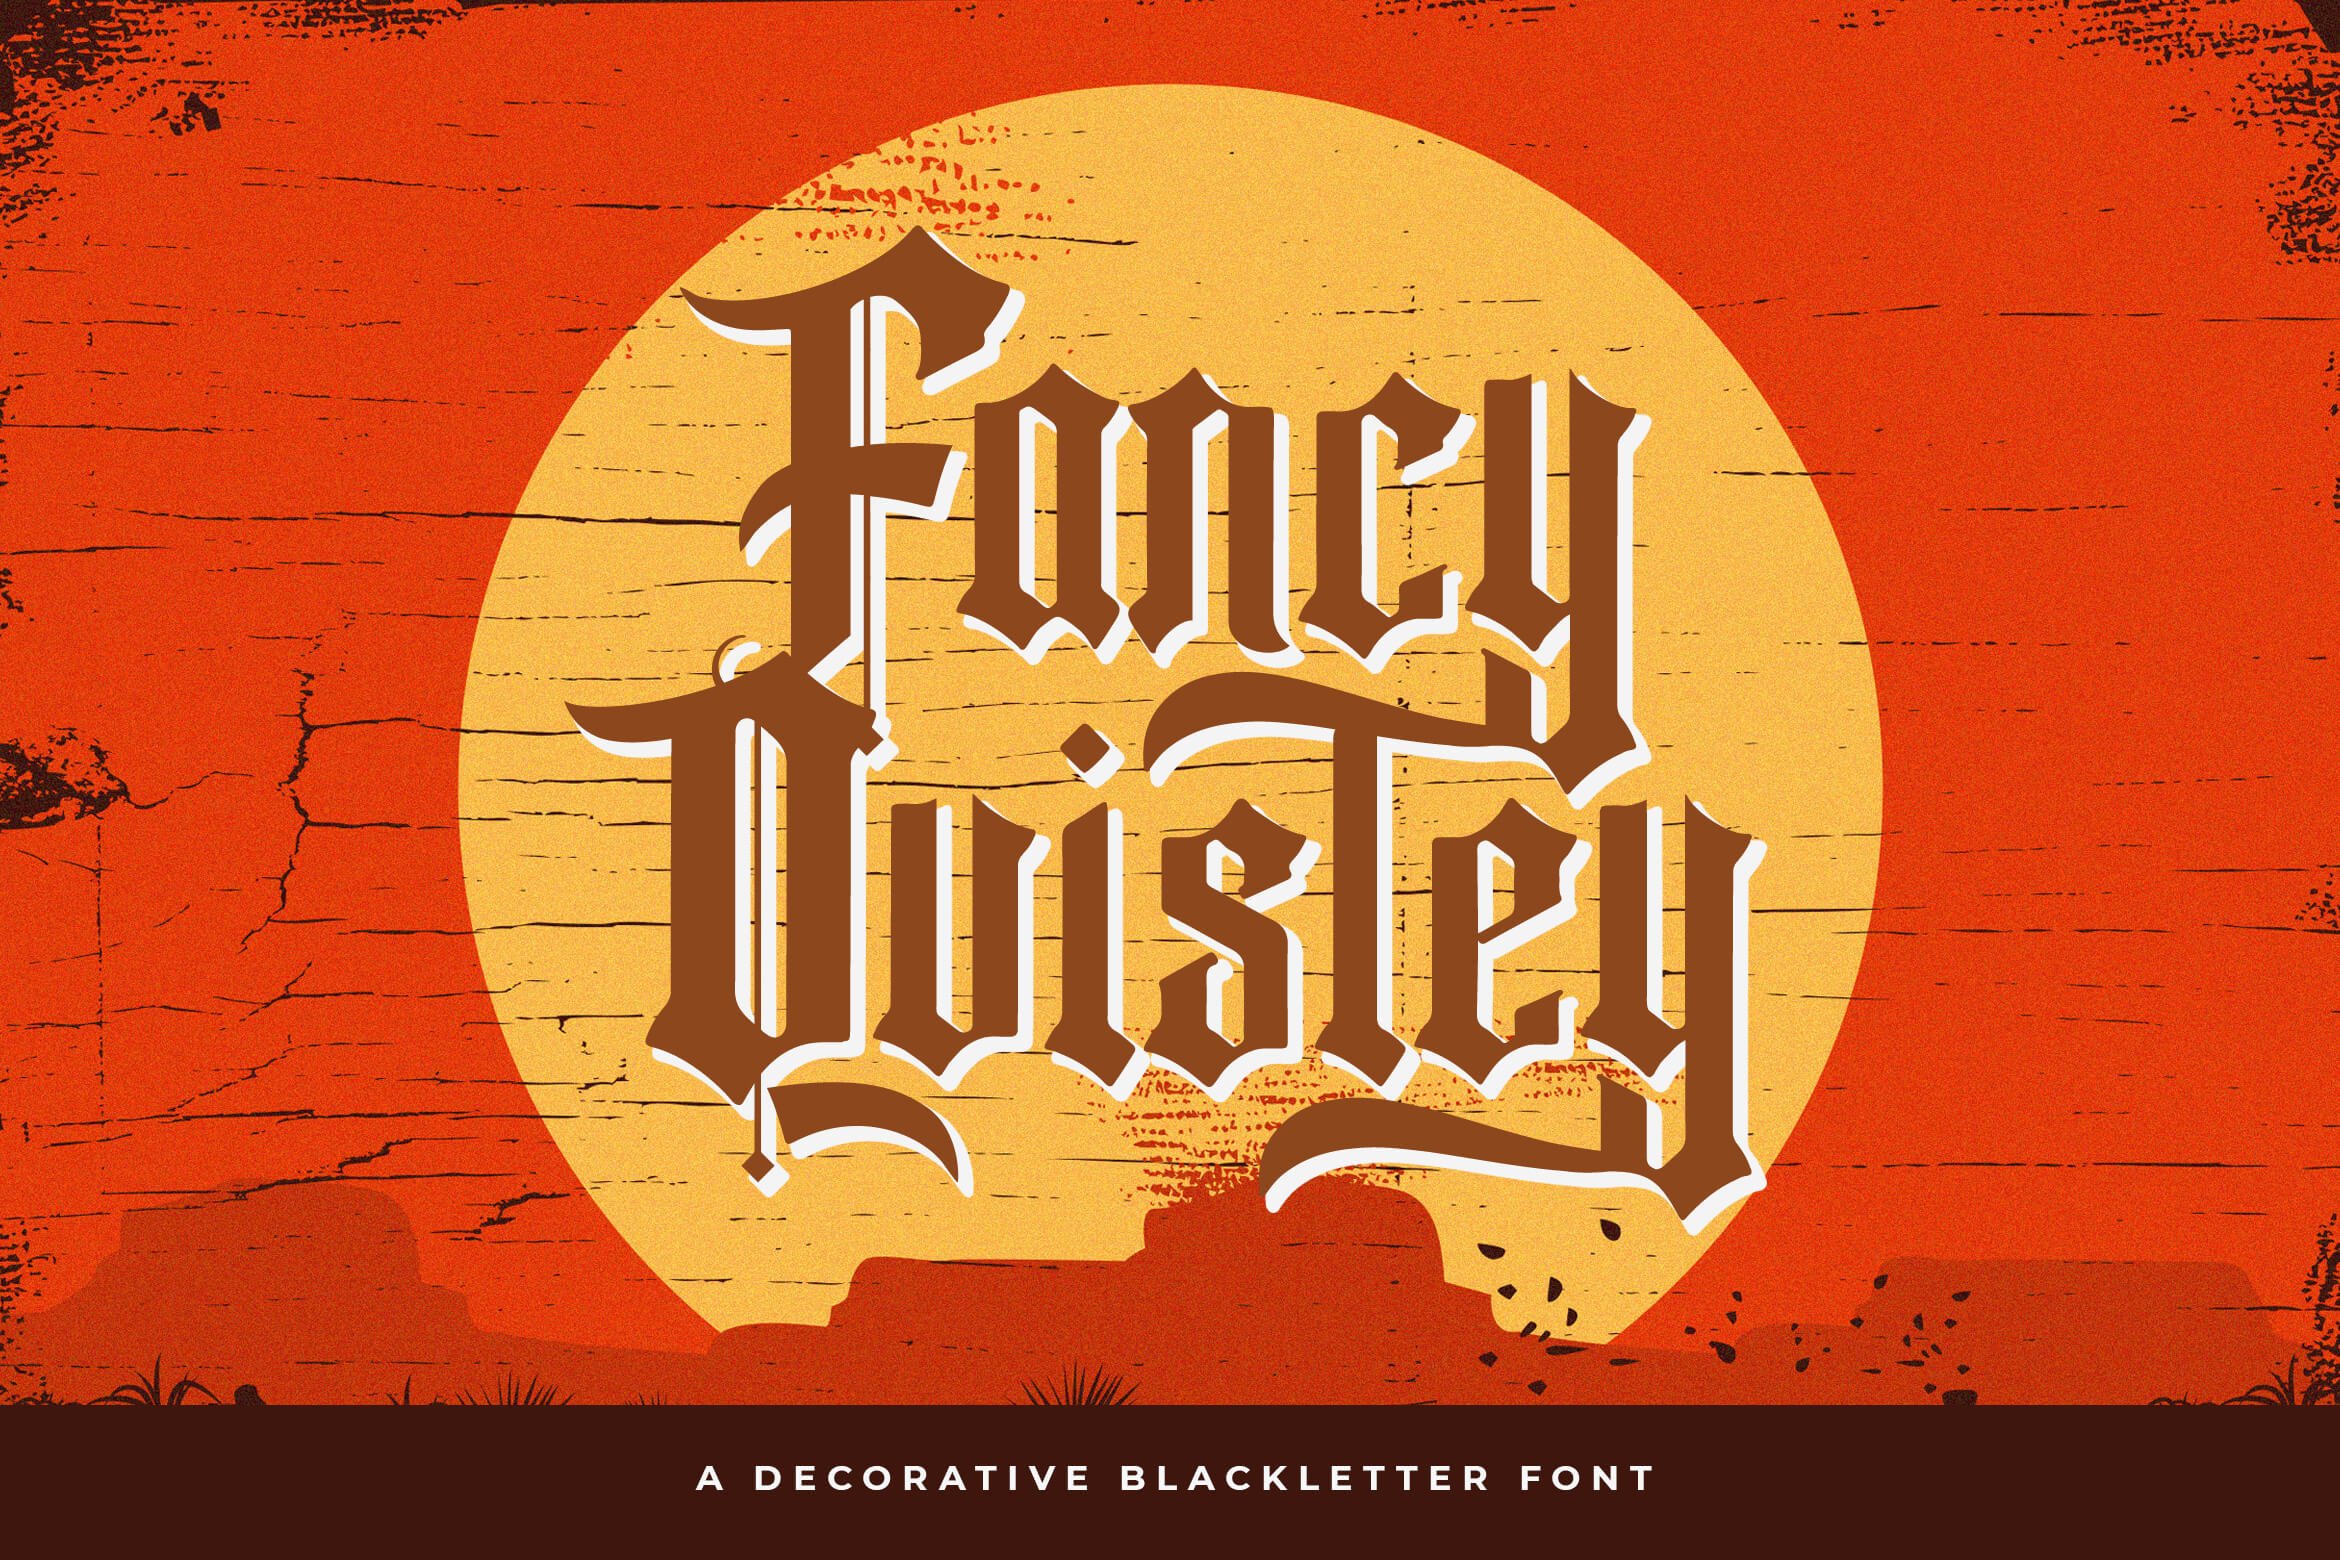 Fancy Quisley - Blackletter Font cover image.